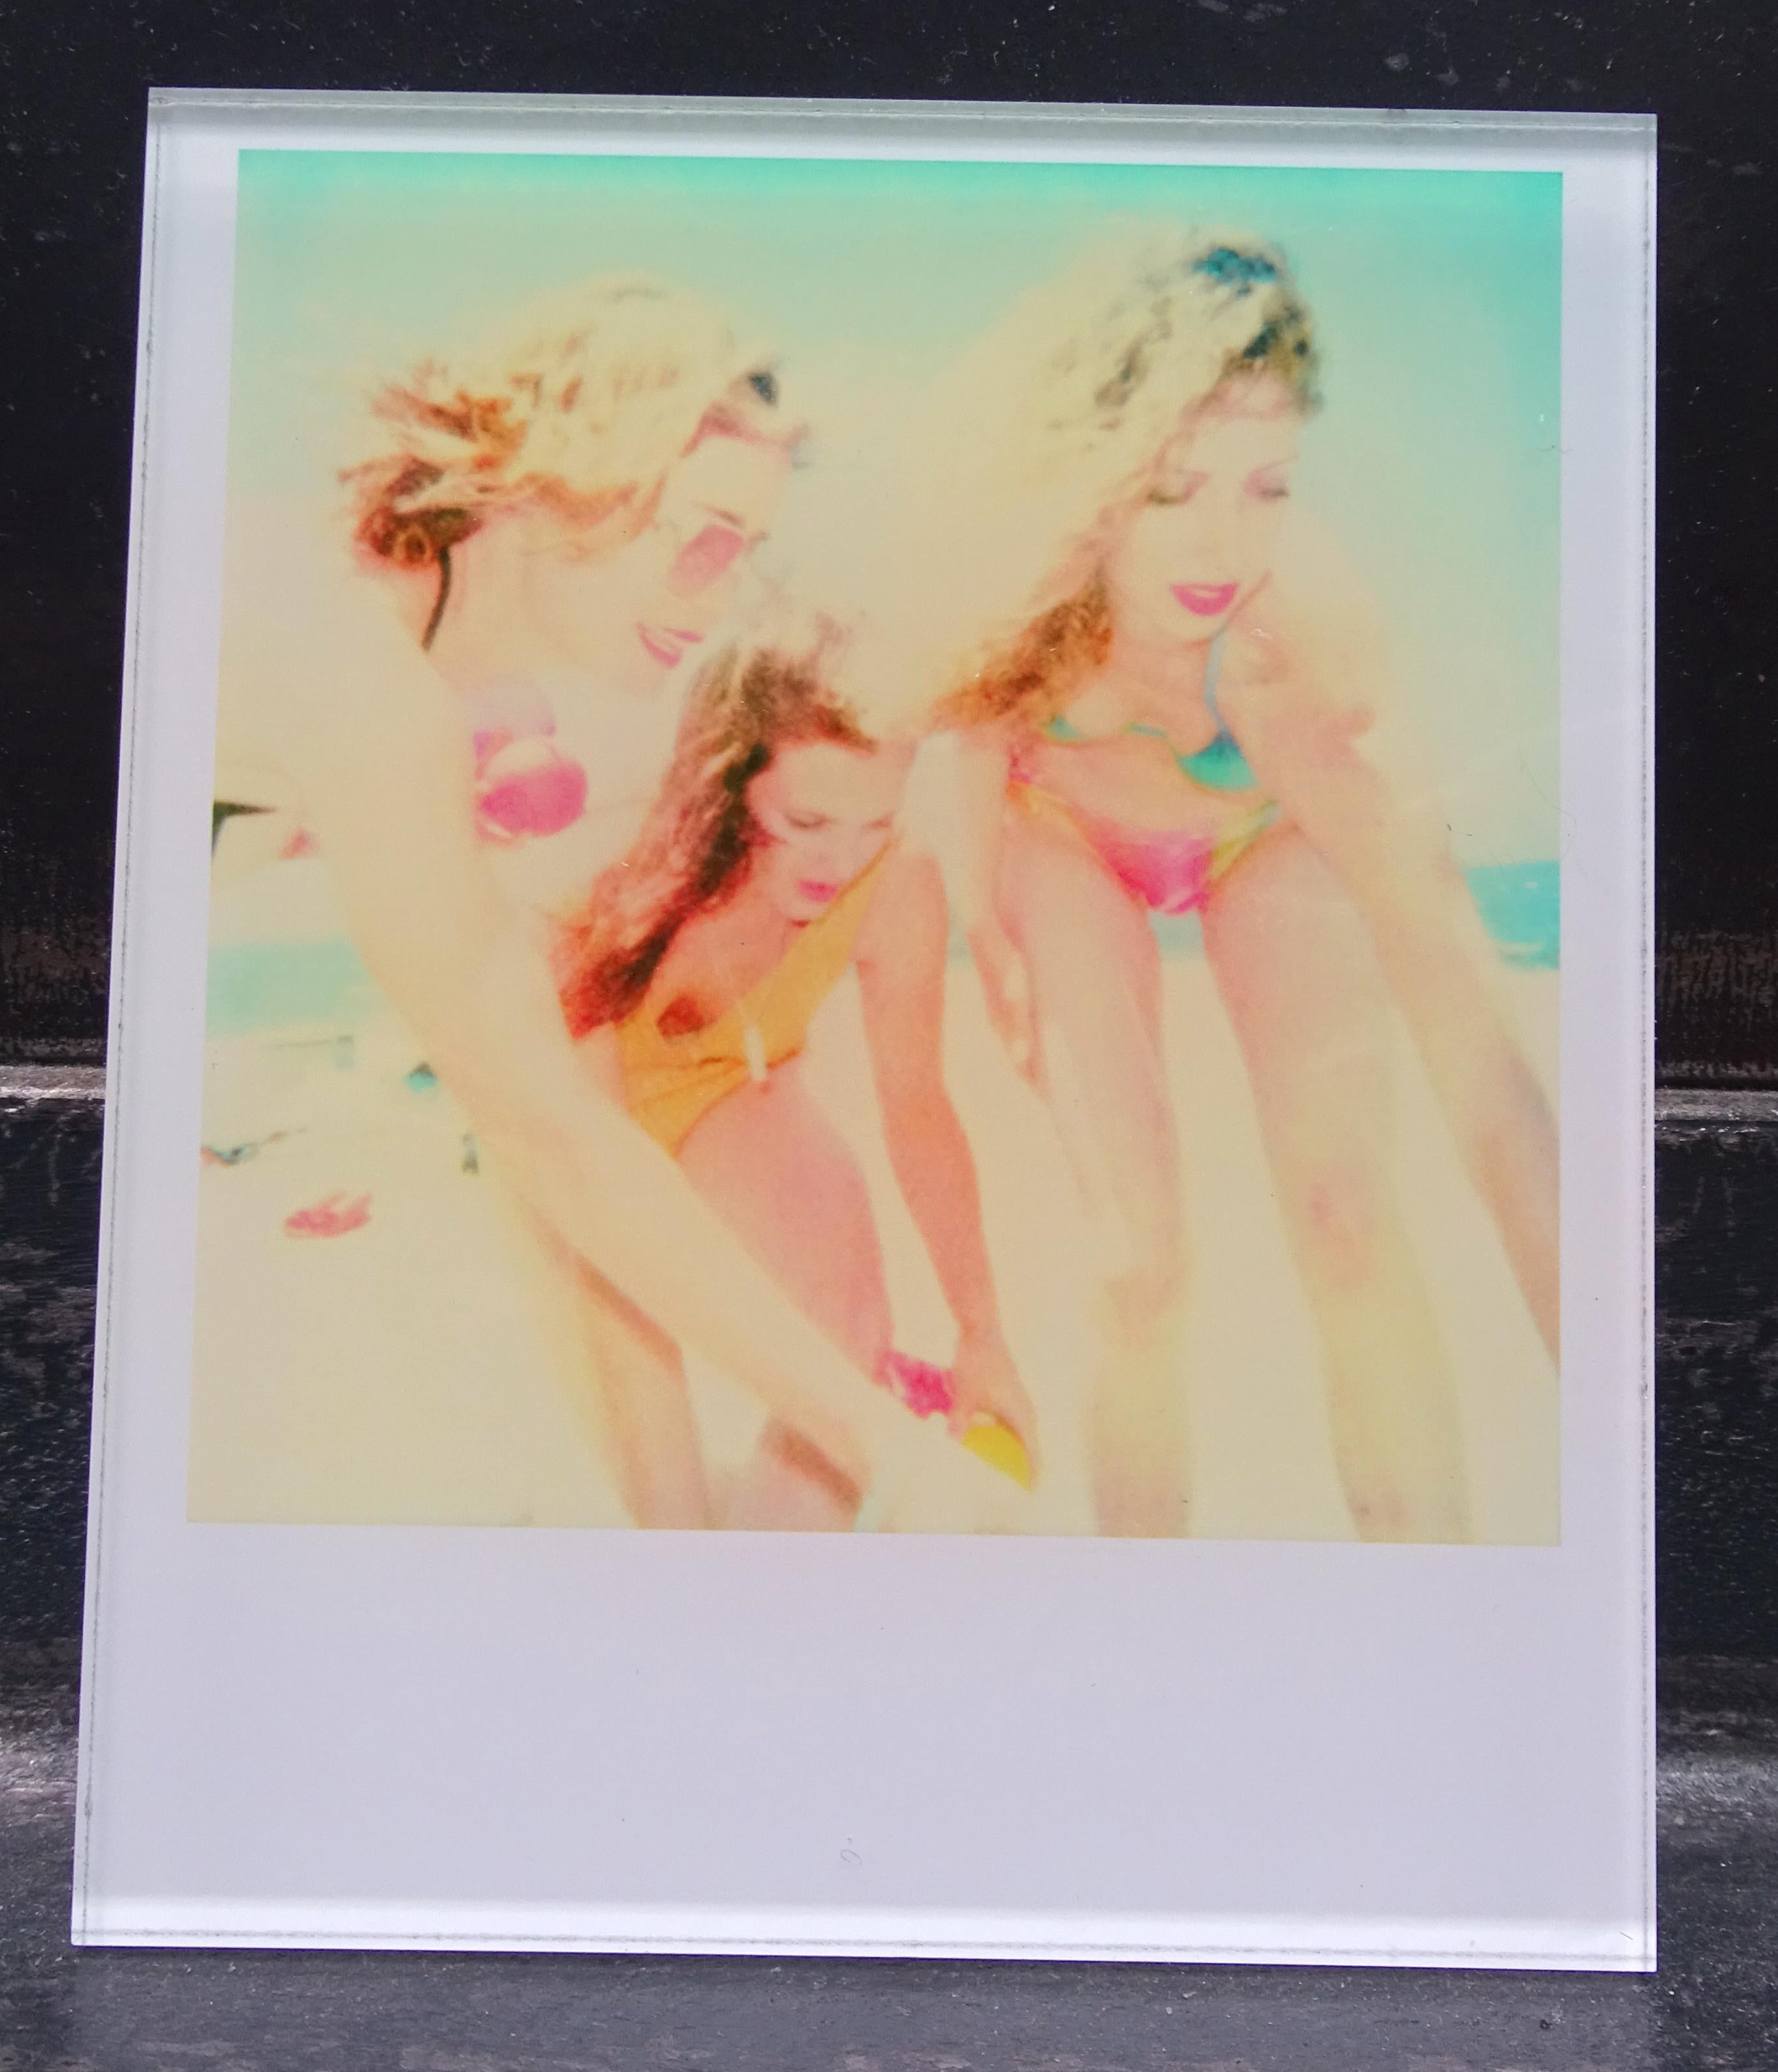 Beachshoot Mini #06 - montiert - mit Rdaha Mitchell, basiert auf einem Polaroid